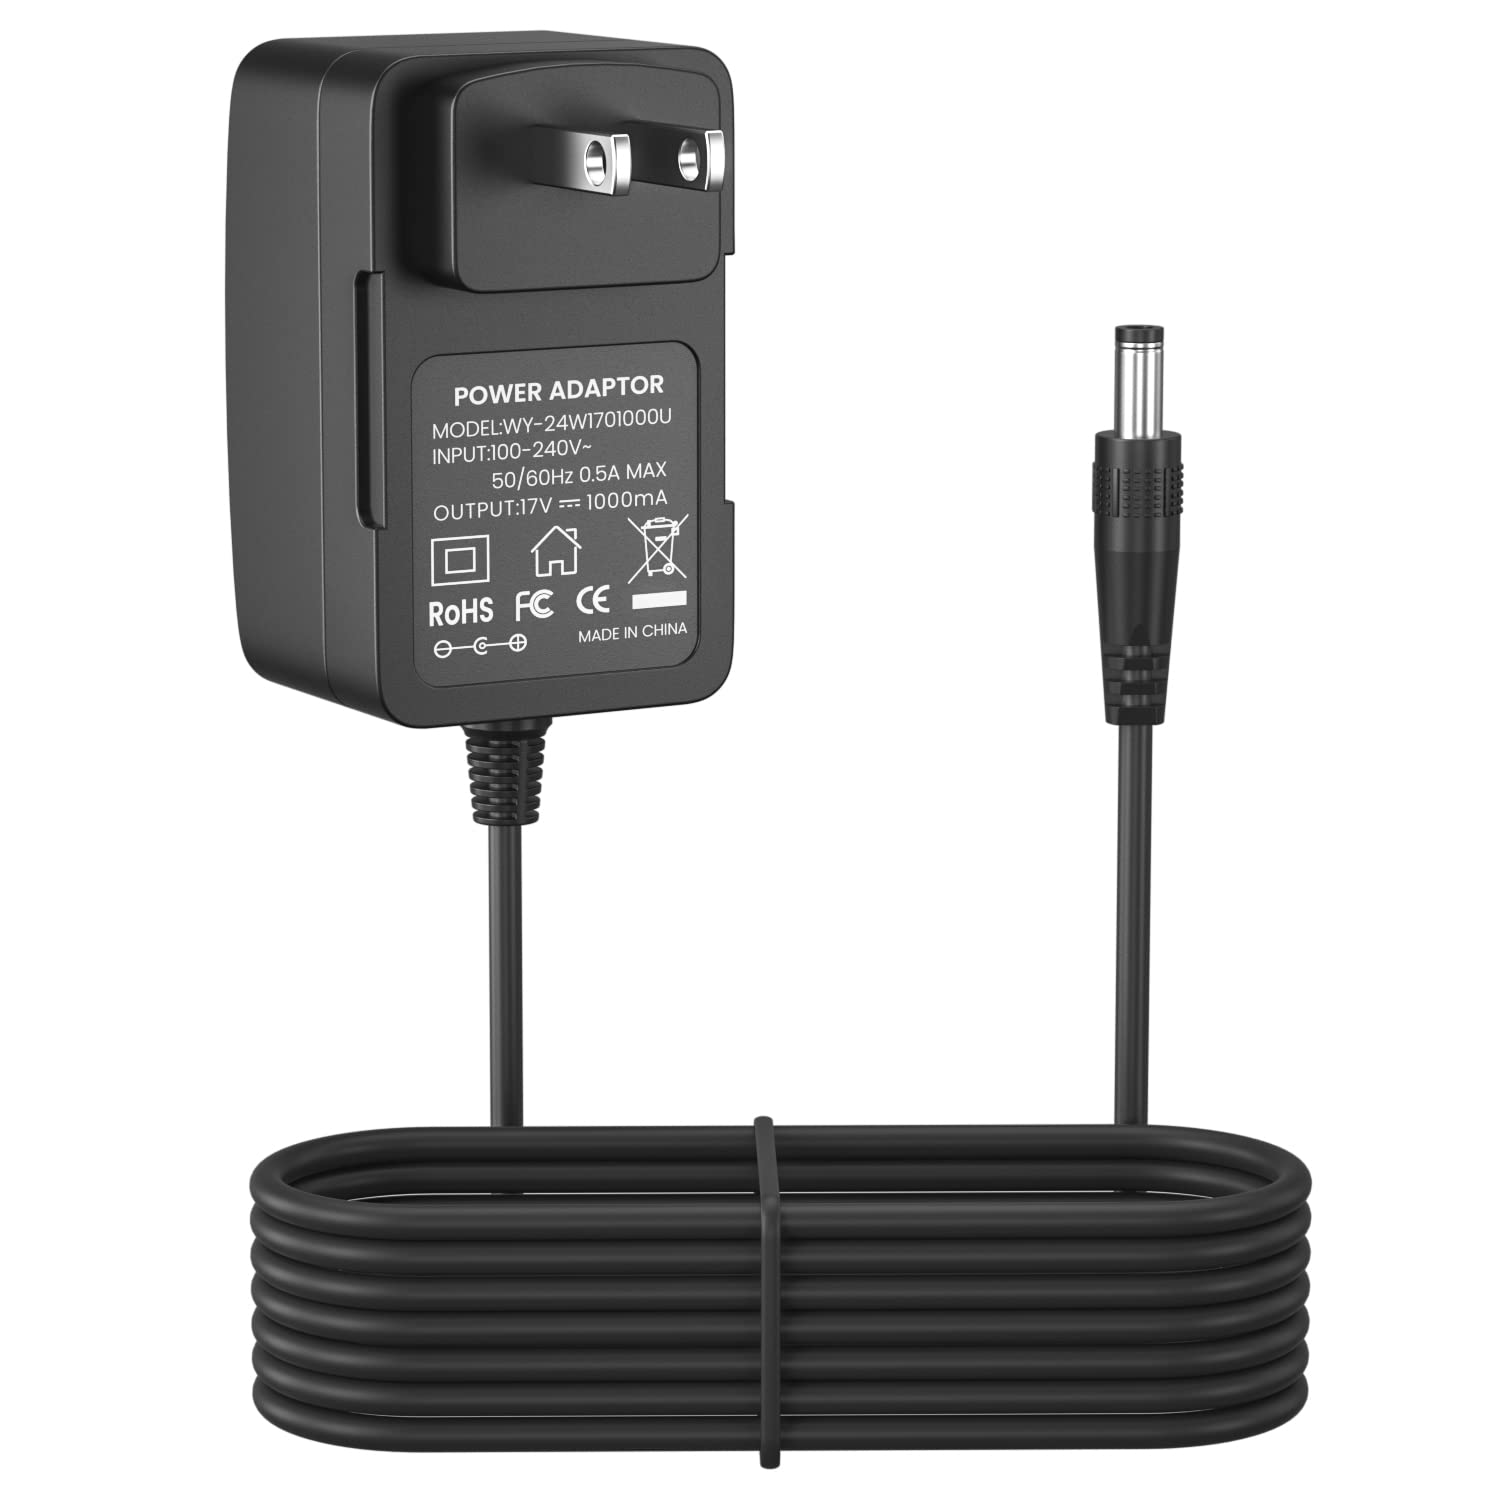 Introducir 95+ imagen bose soundlink speaker iii charger